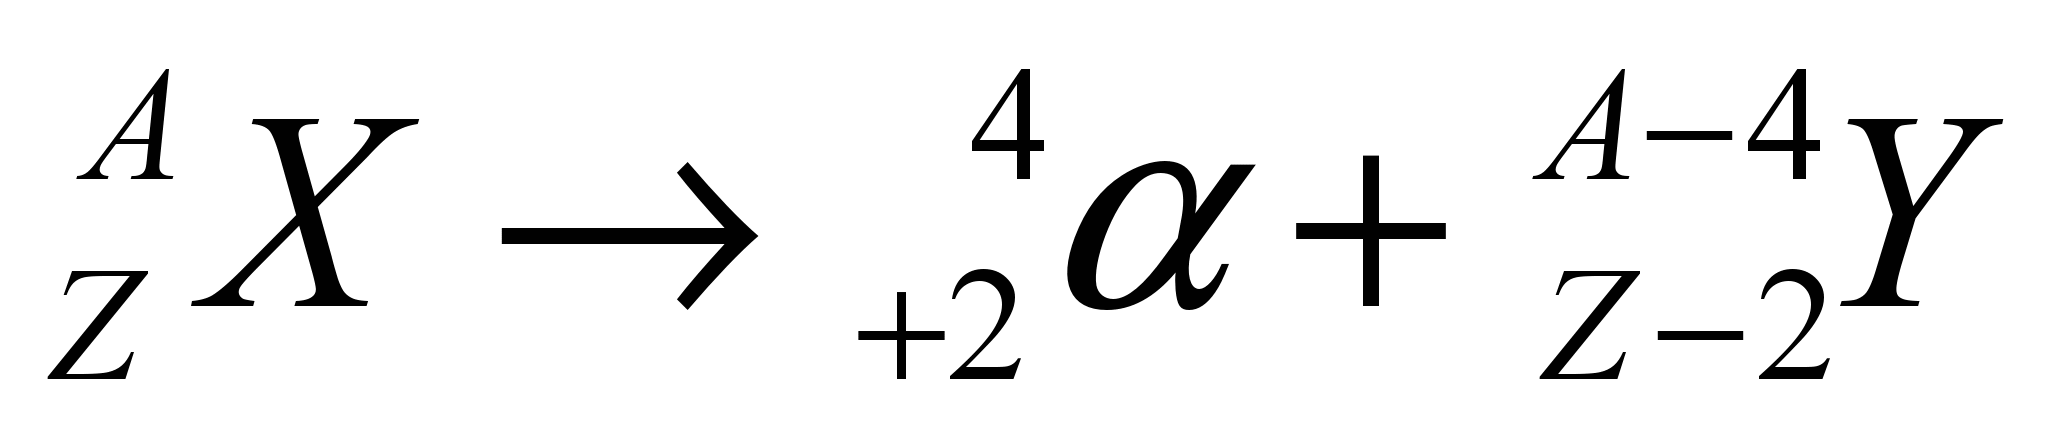 Реакция α распада. Схема Альфа распада. Альфа распад формула. Альфа распад в общем виде. Уравнение Альфа распада.